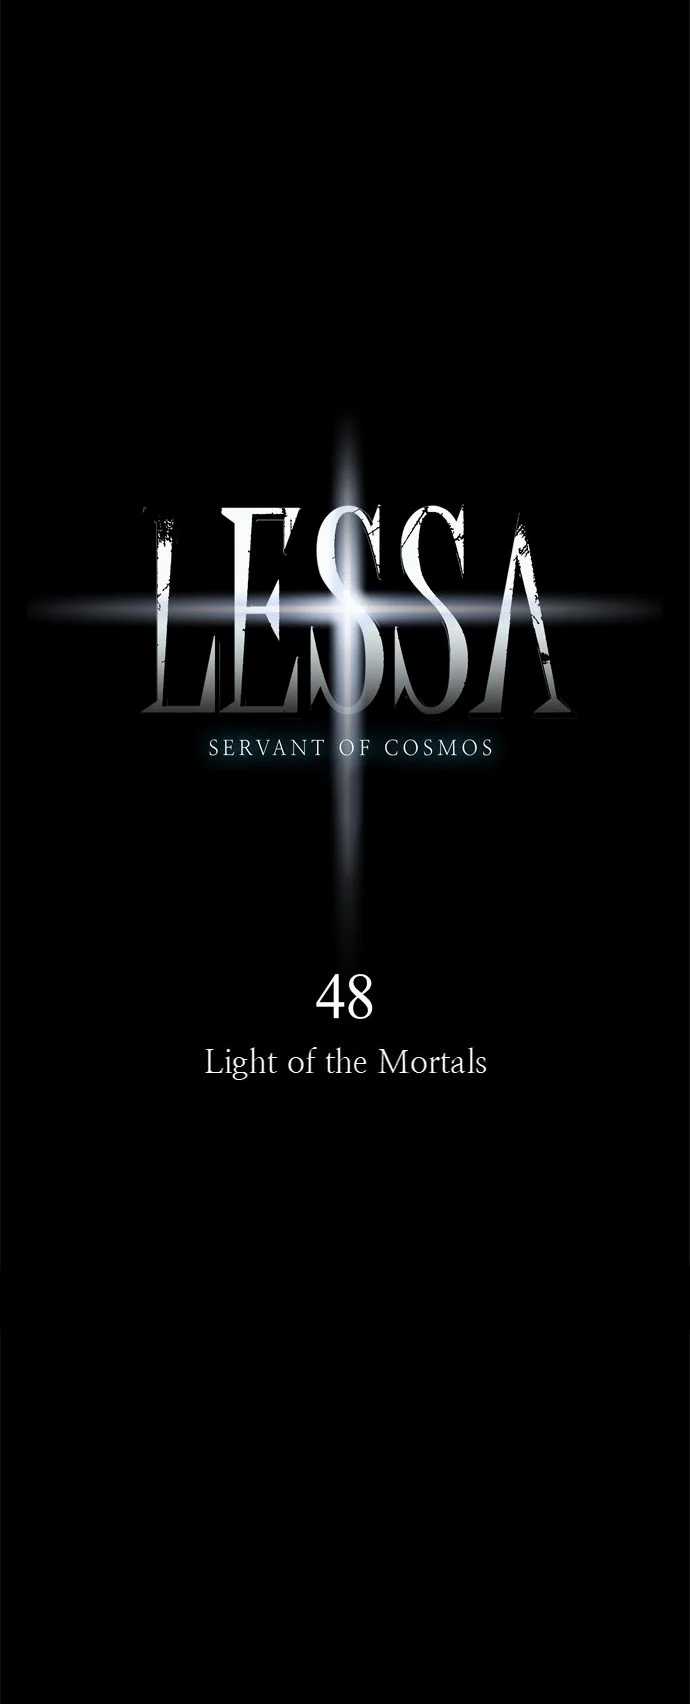 LESSA – Servant of Cosmos Chapter 48